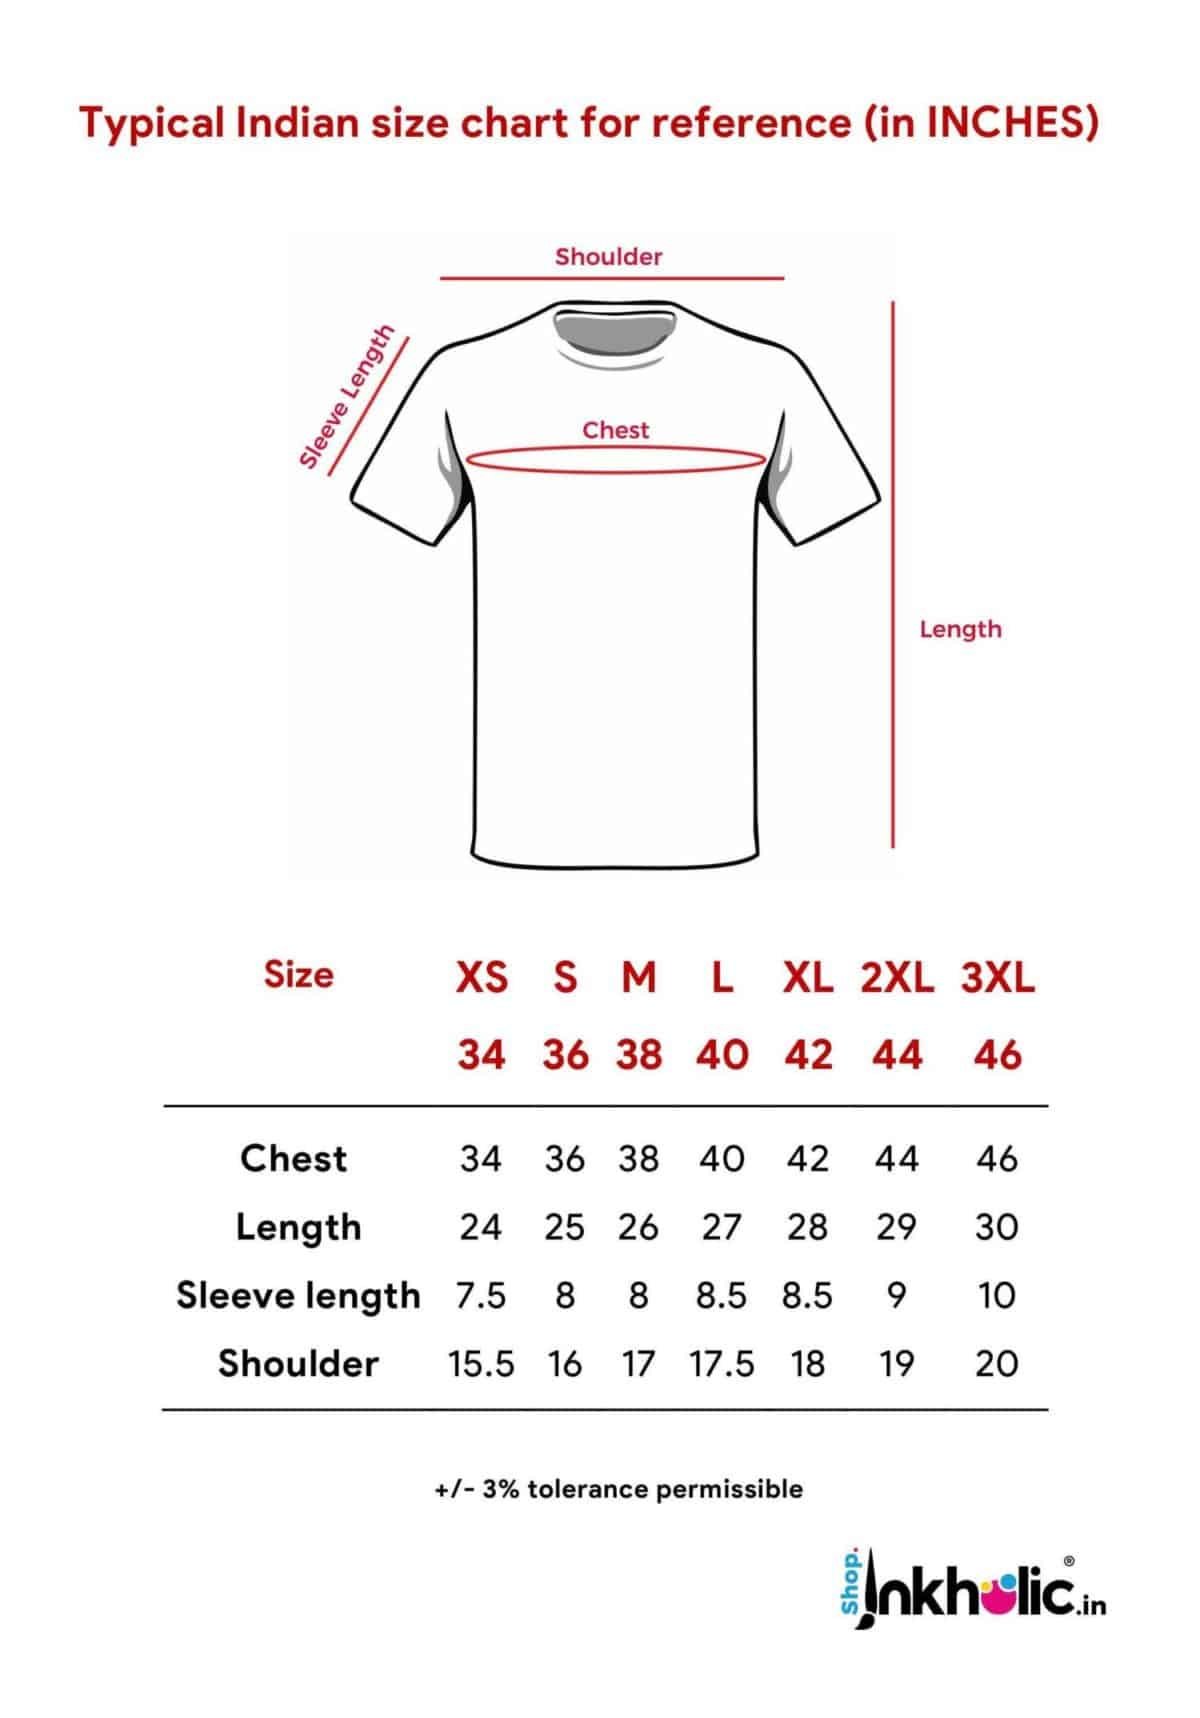 tshirt size chart